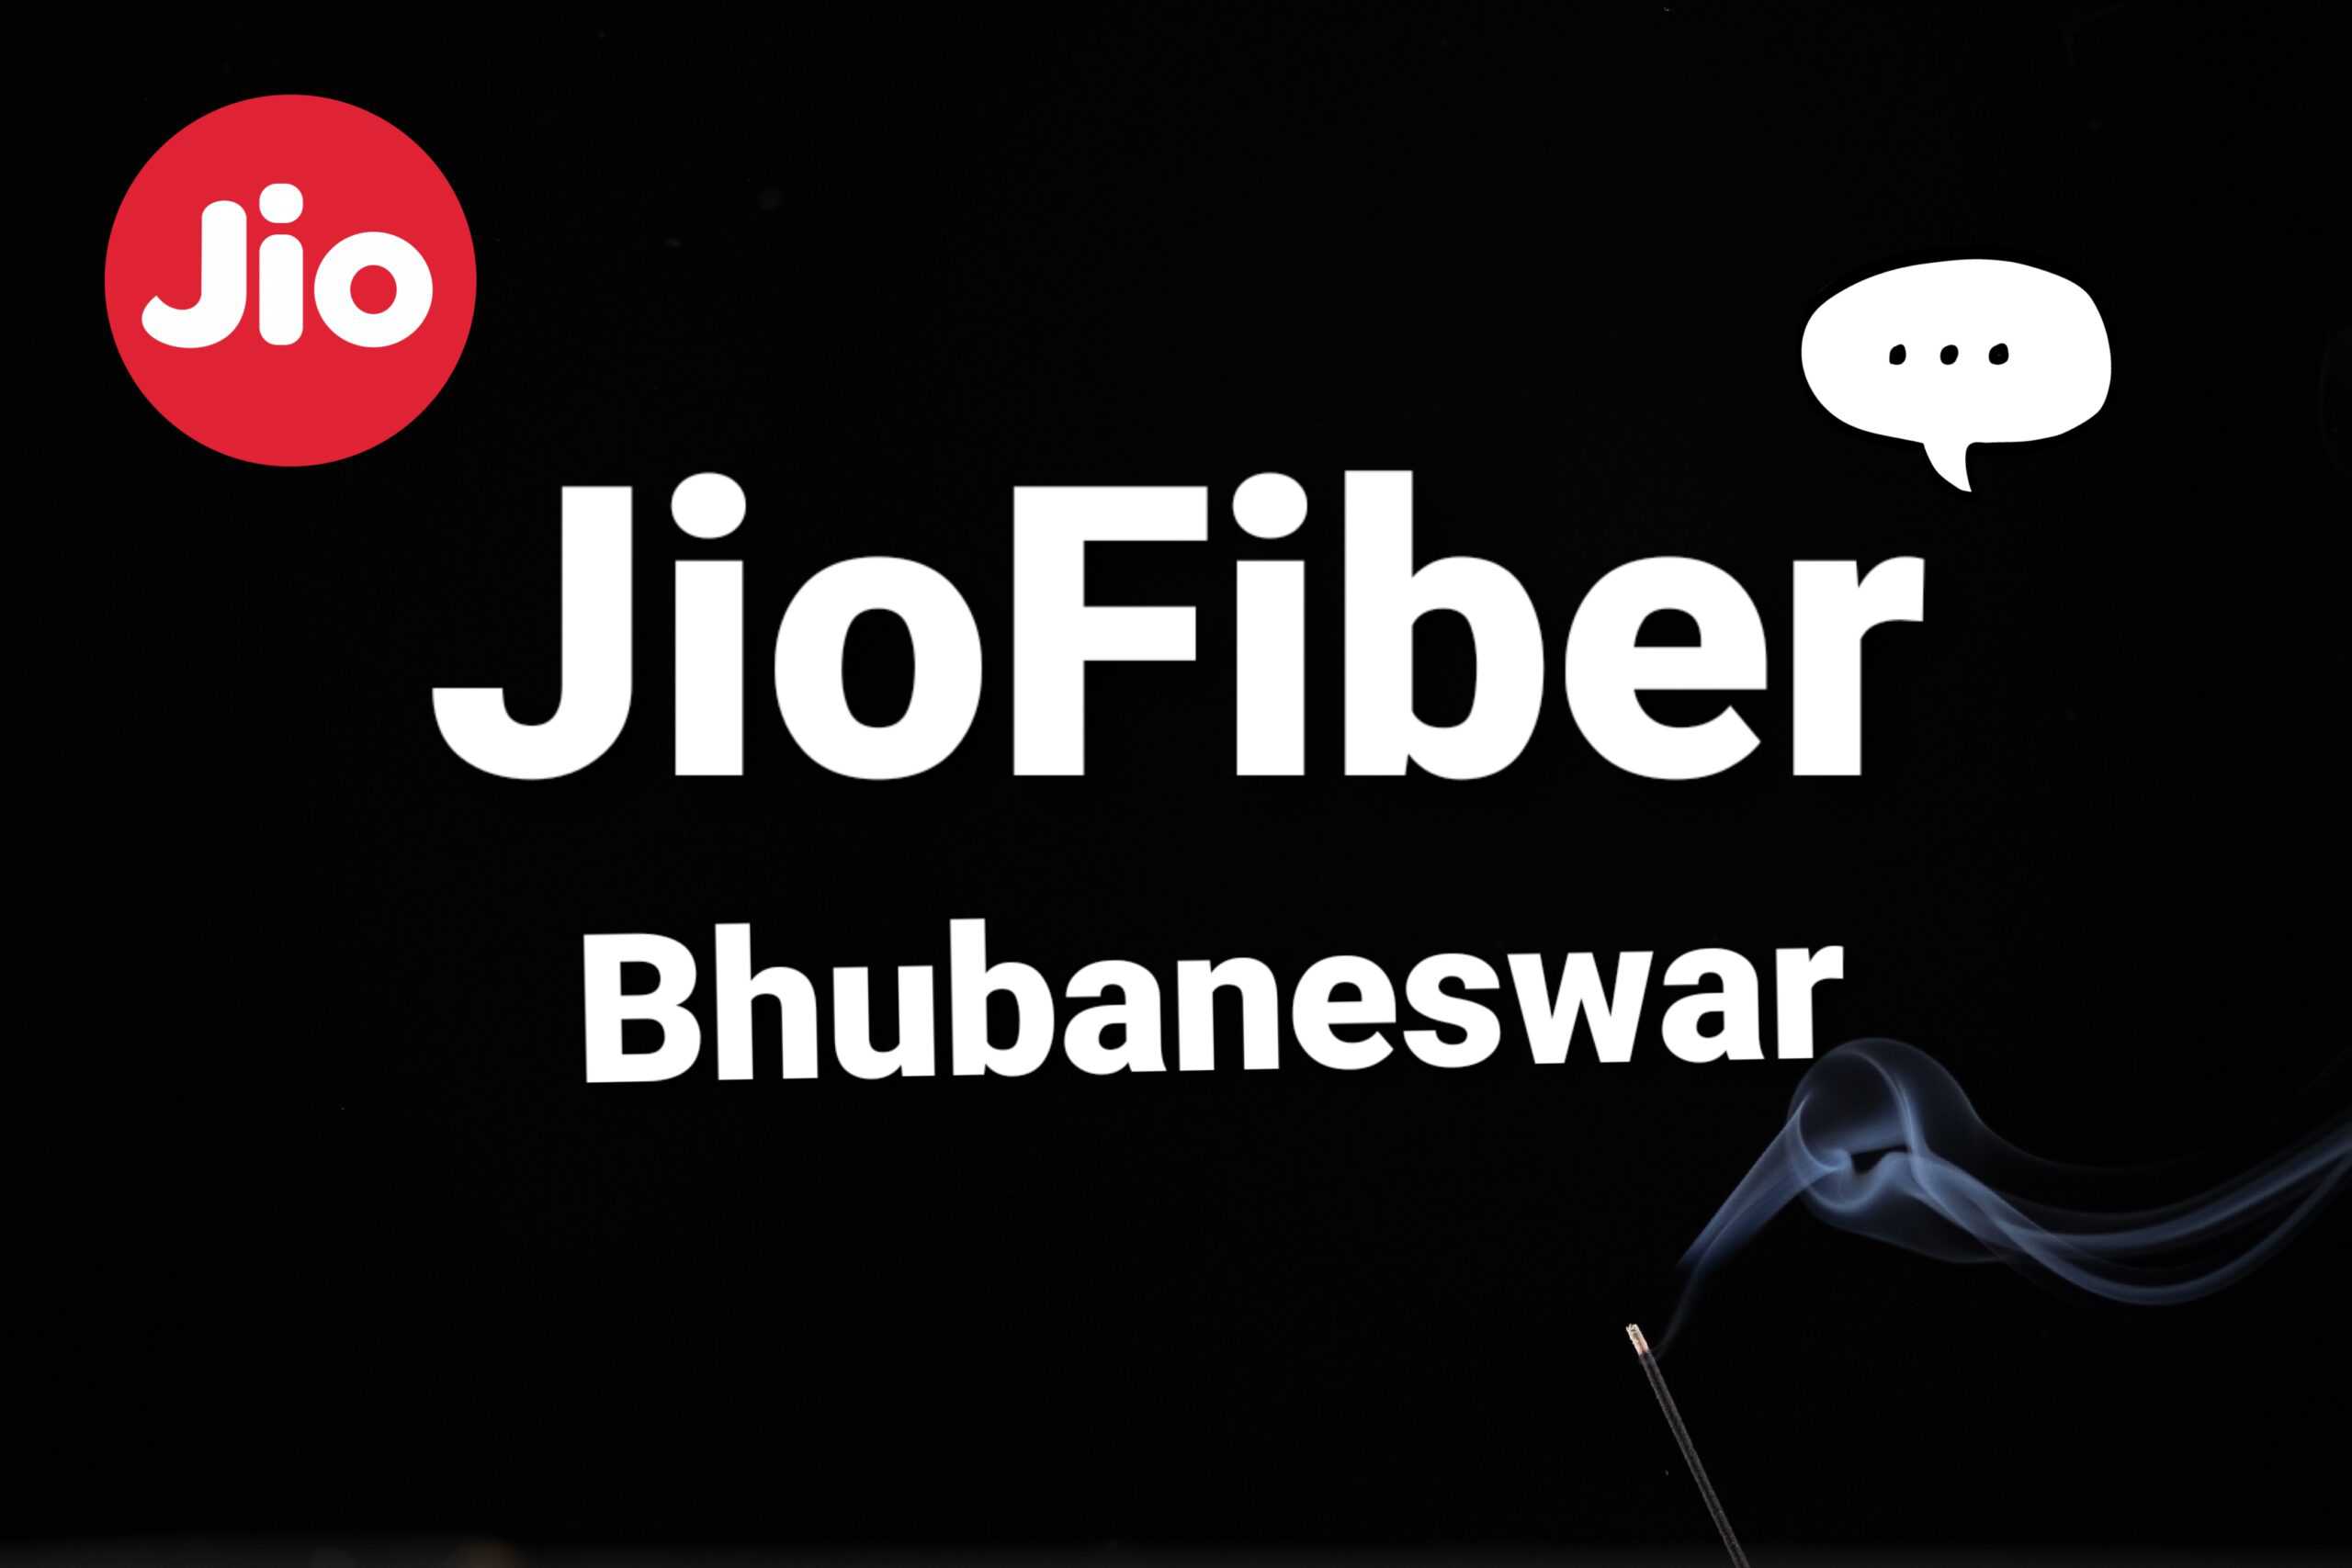 Jio Fiber Bhubaneswar | Registration, Plans, Offers & Customer Care Number